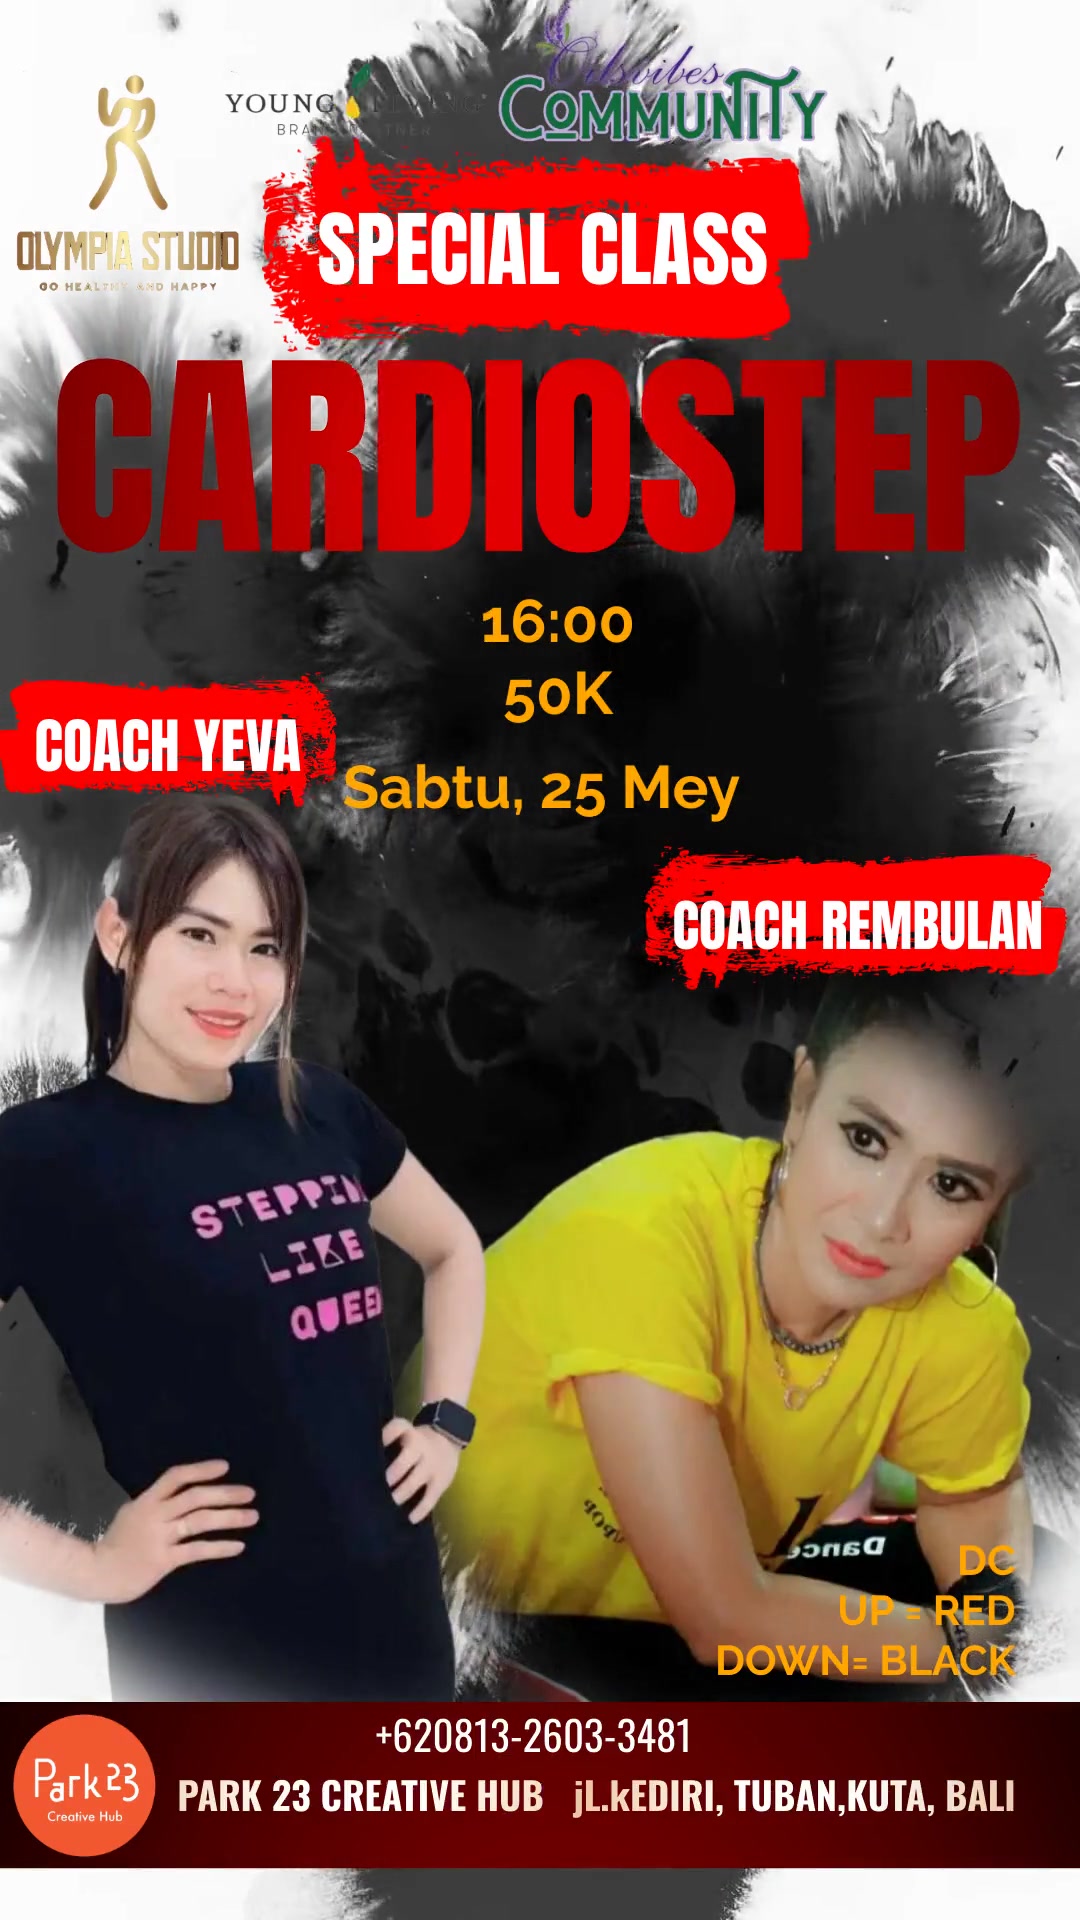 Cardiostep- Coach Yeva and Coach Rembulan